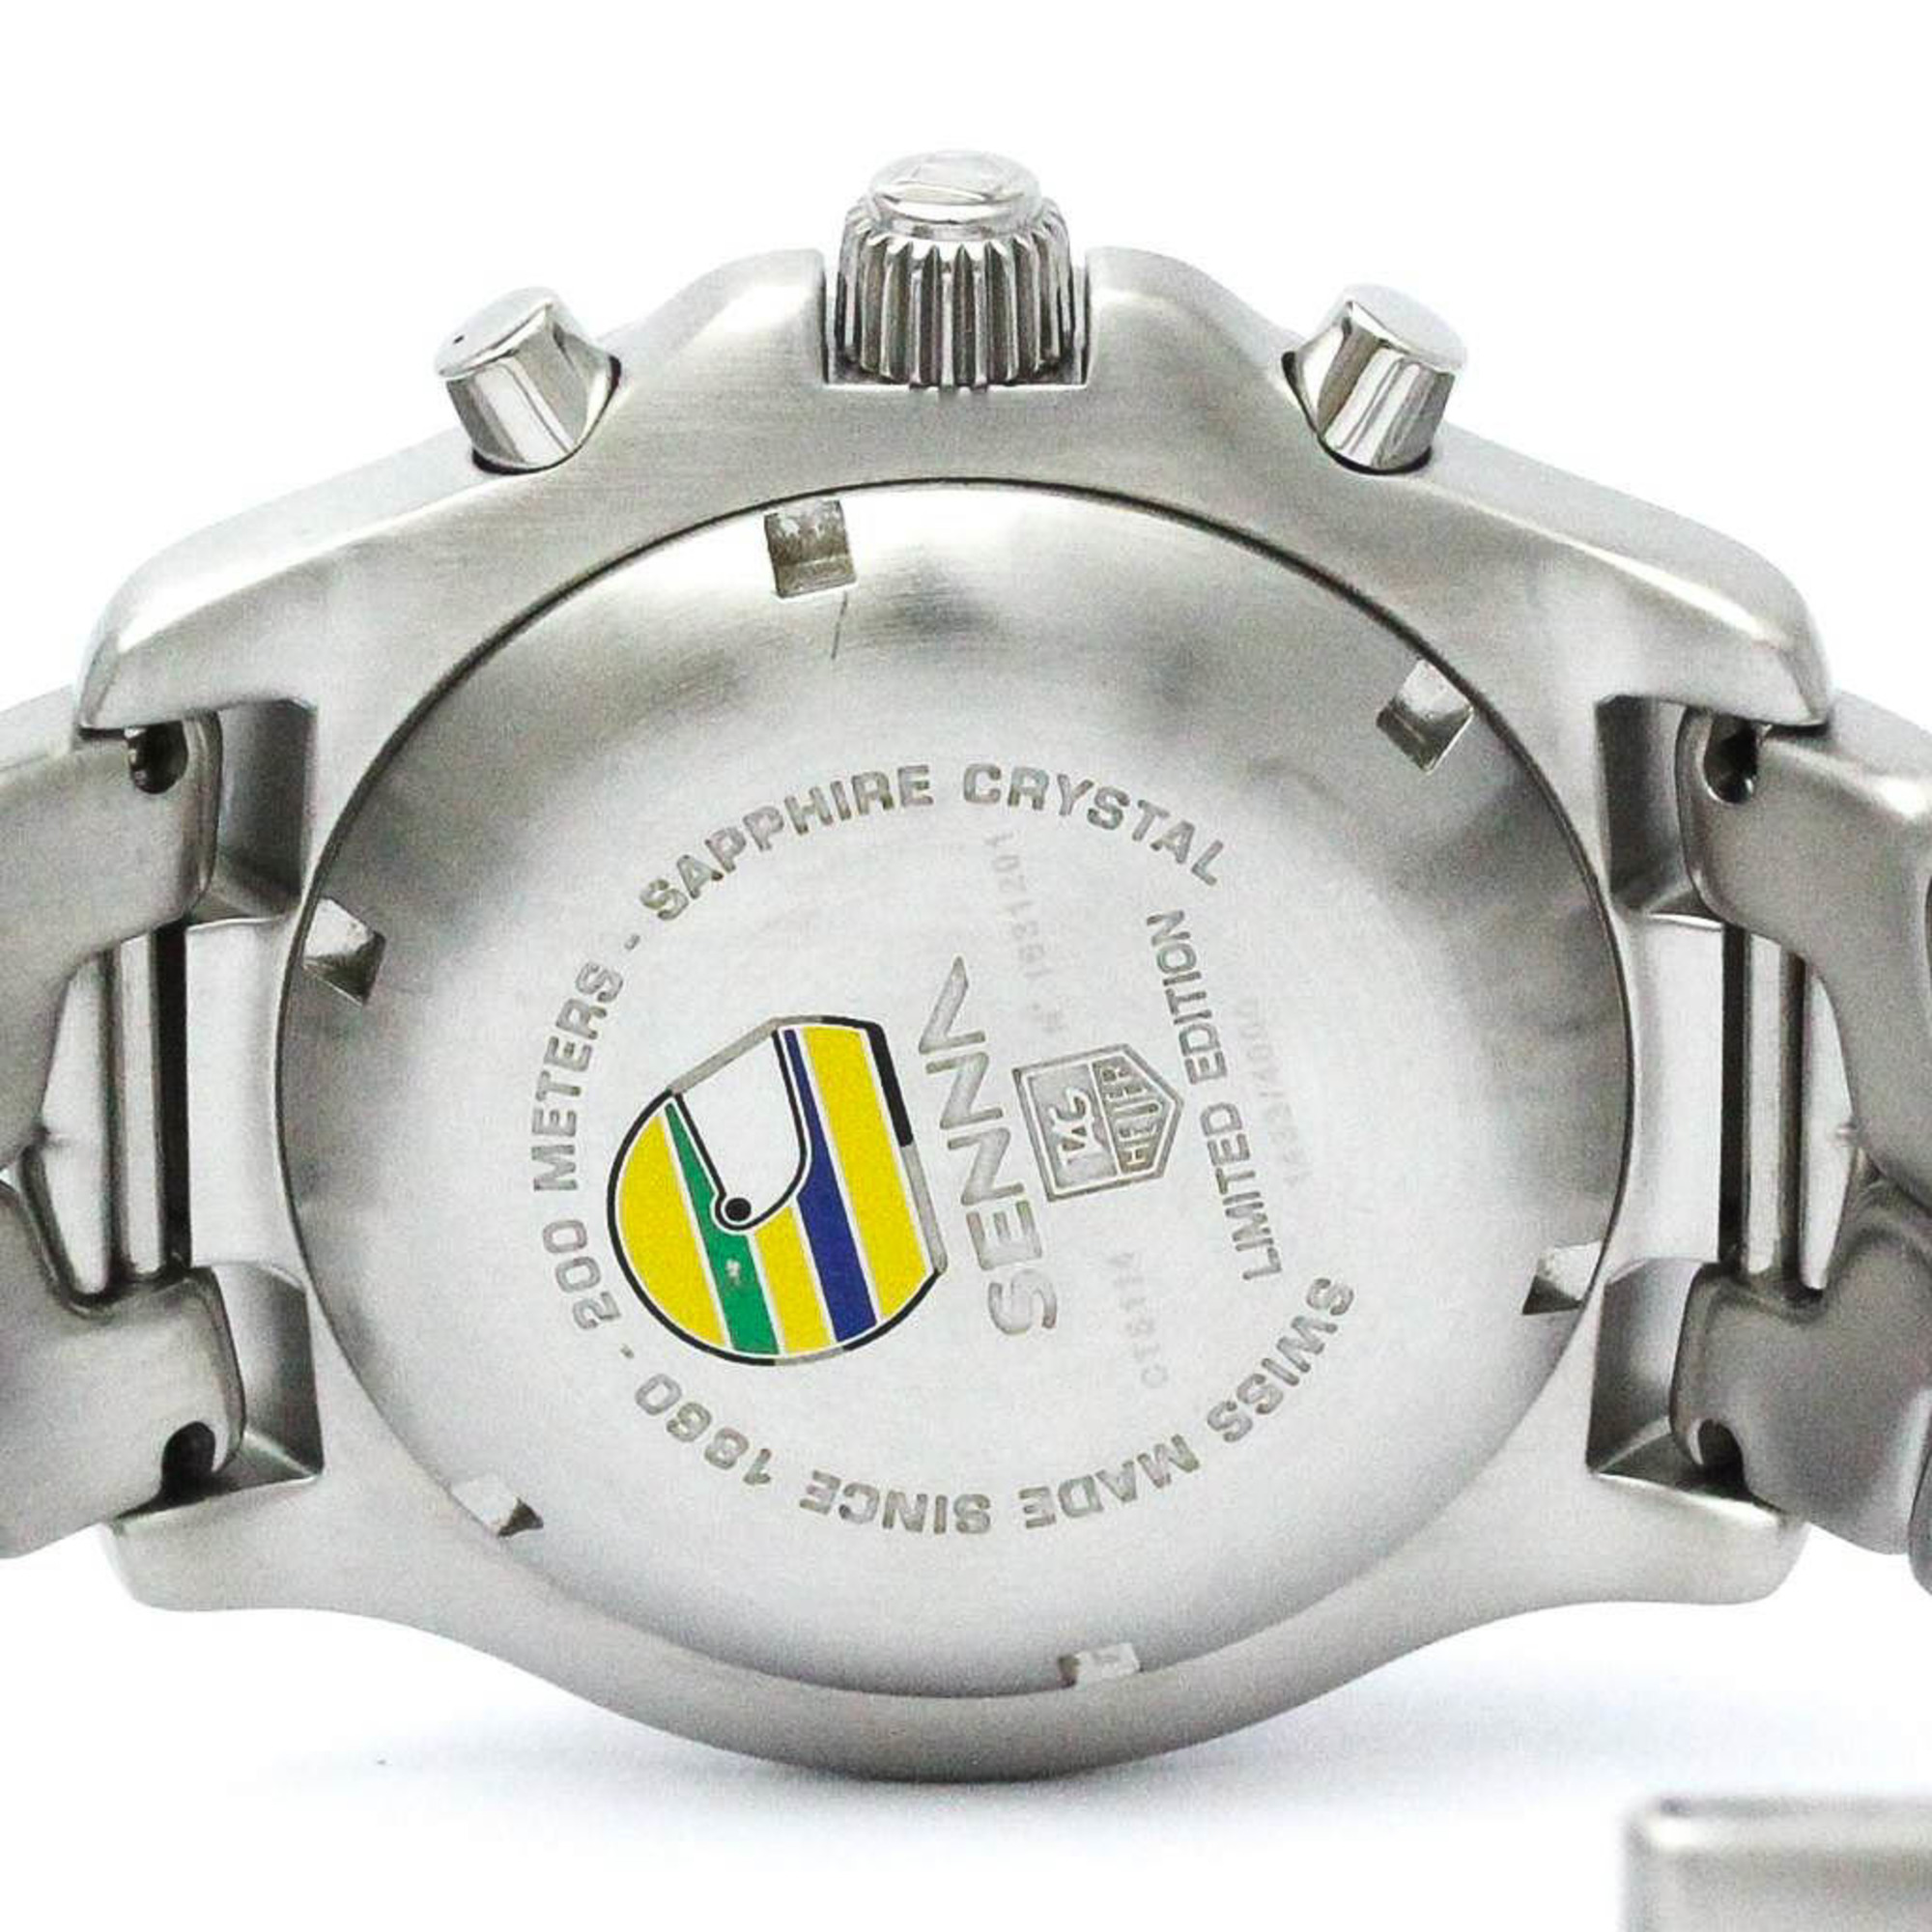 Polished TAG HEUER LINK Chronograph Ayrton Senna Limited Watch CT5114 BF571766